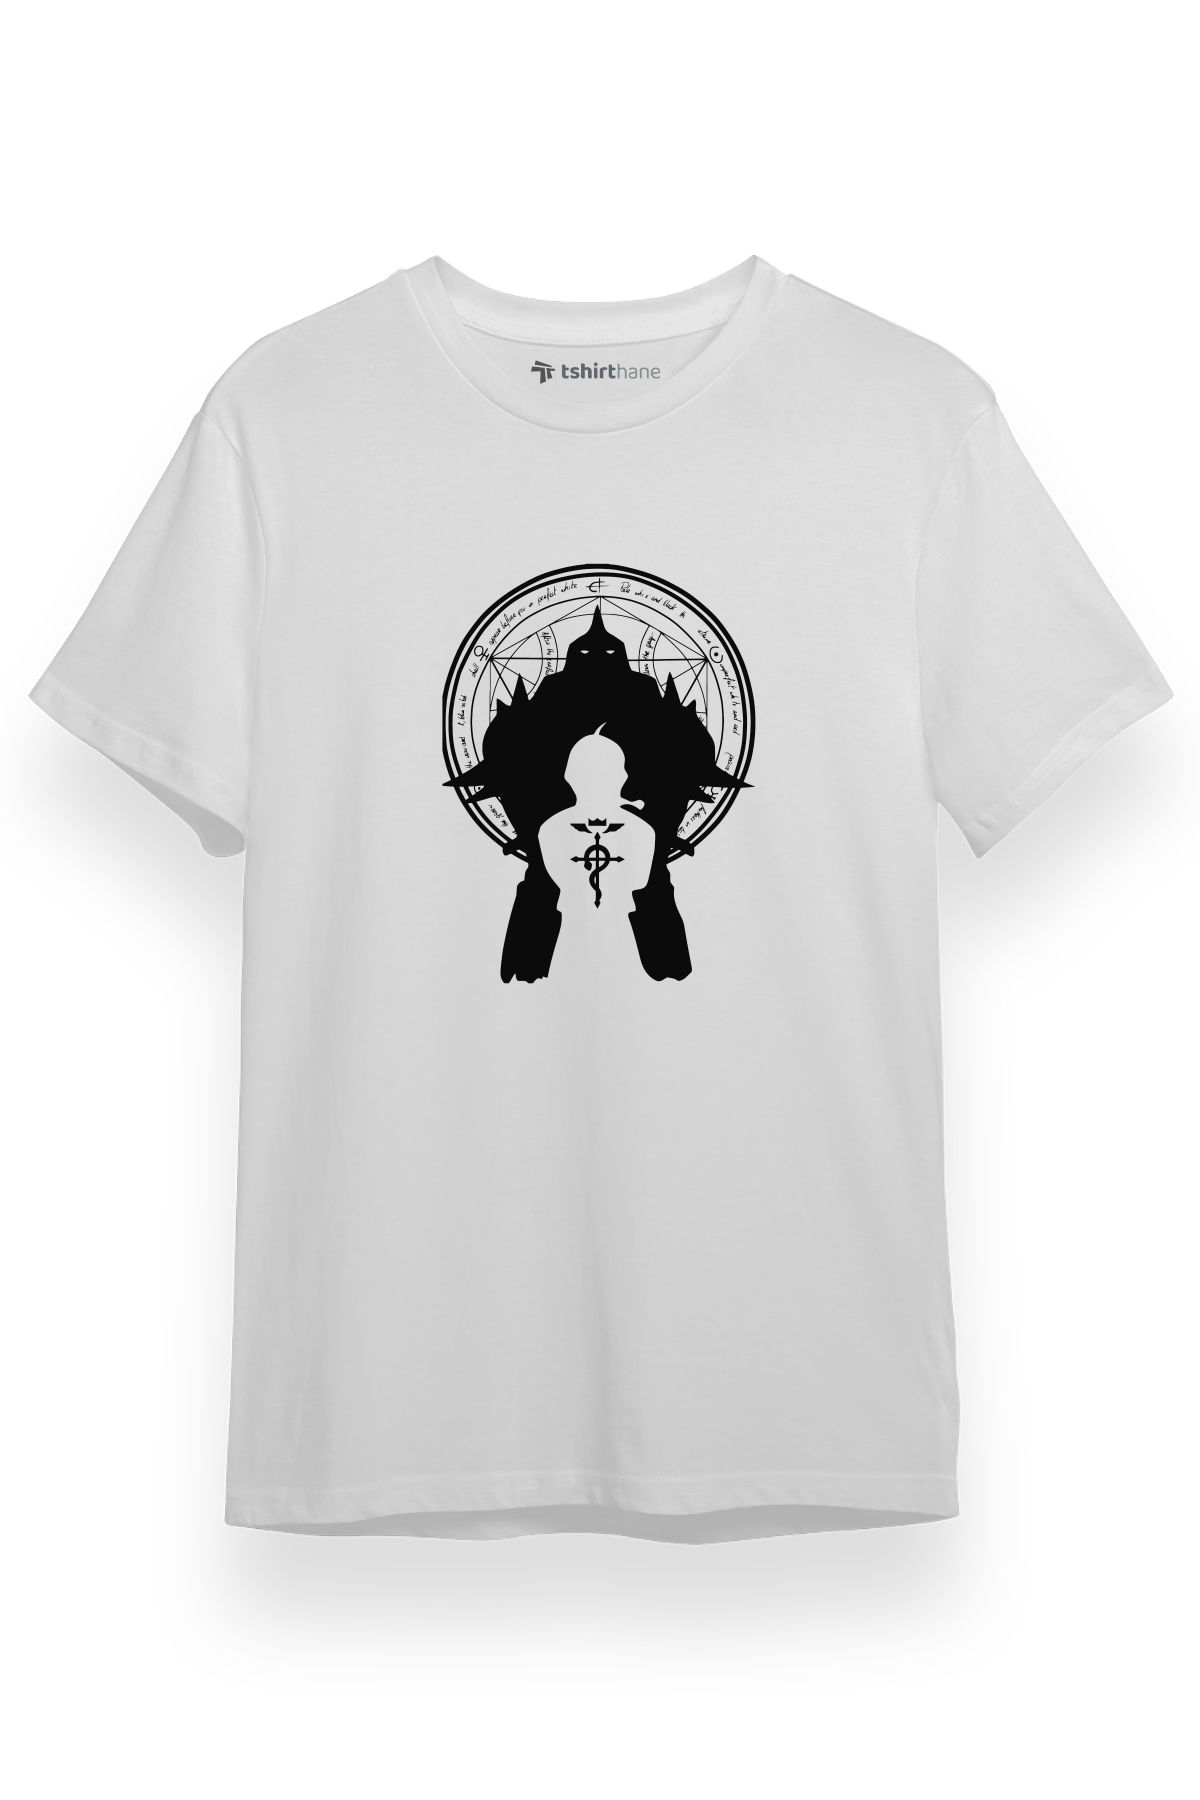 Fullmetal Alchemist Anime  Logo Beyaz Kısa kol Erkek Tshirt